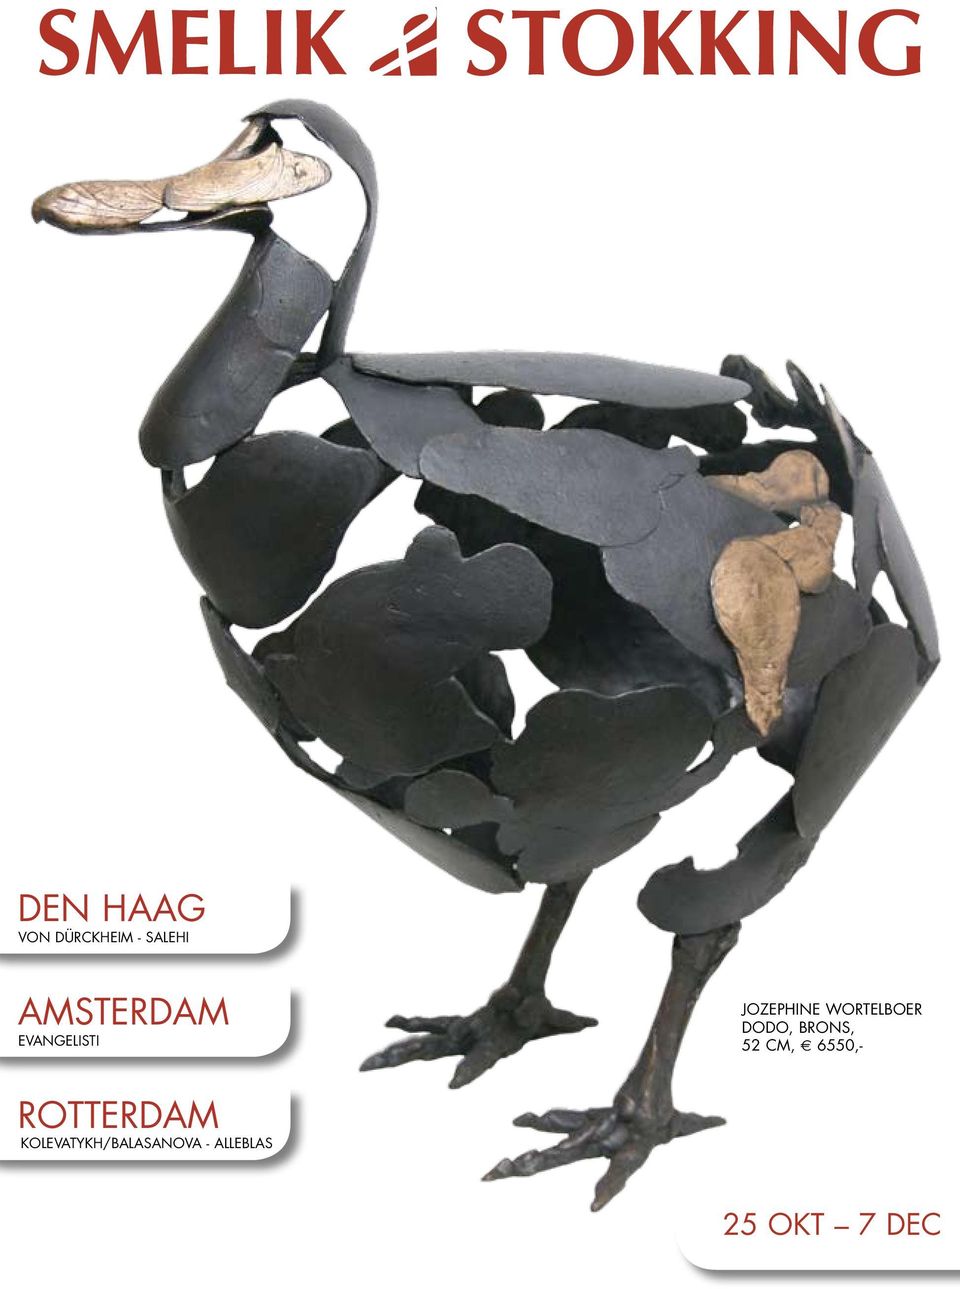 Wortelboer Dodo, brons, 52 cm, 6550,-